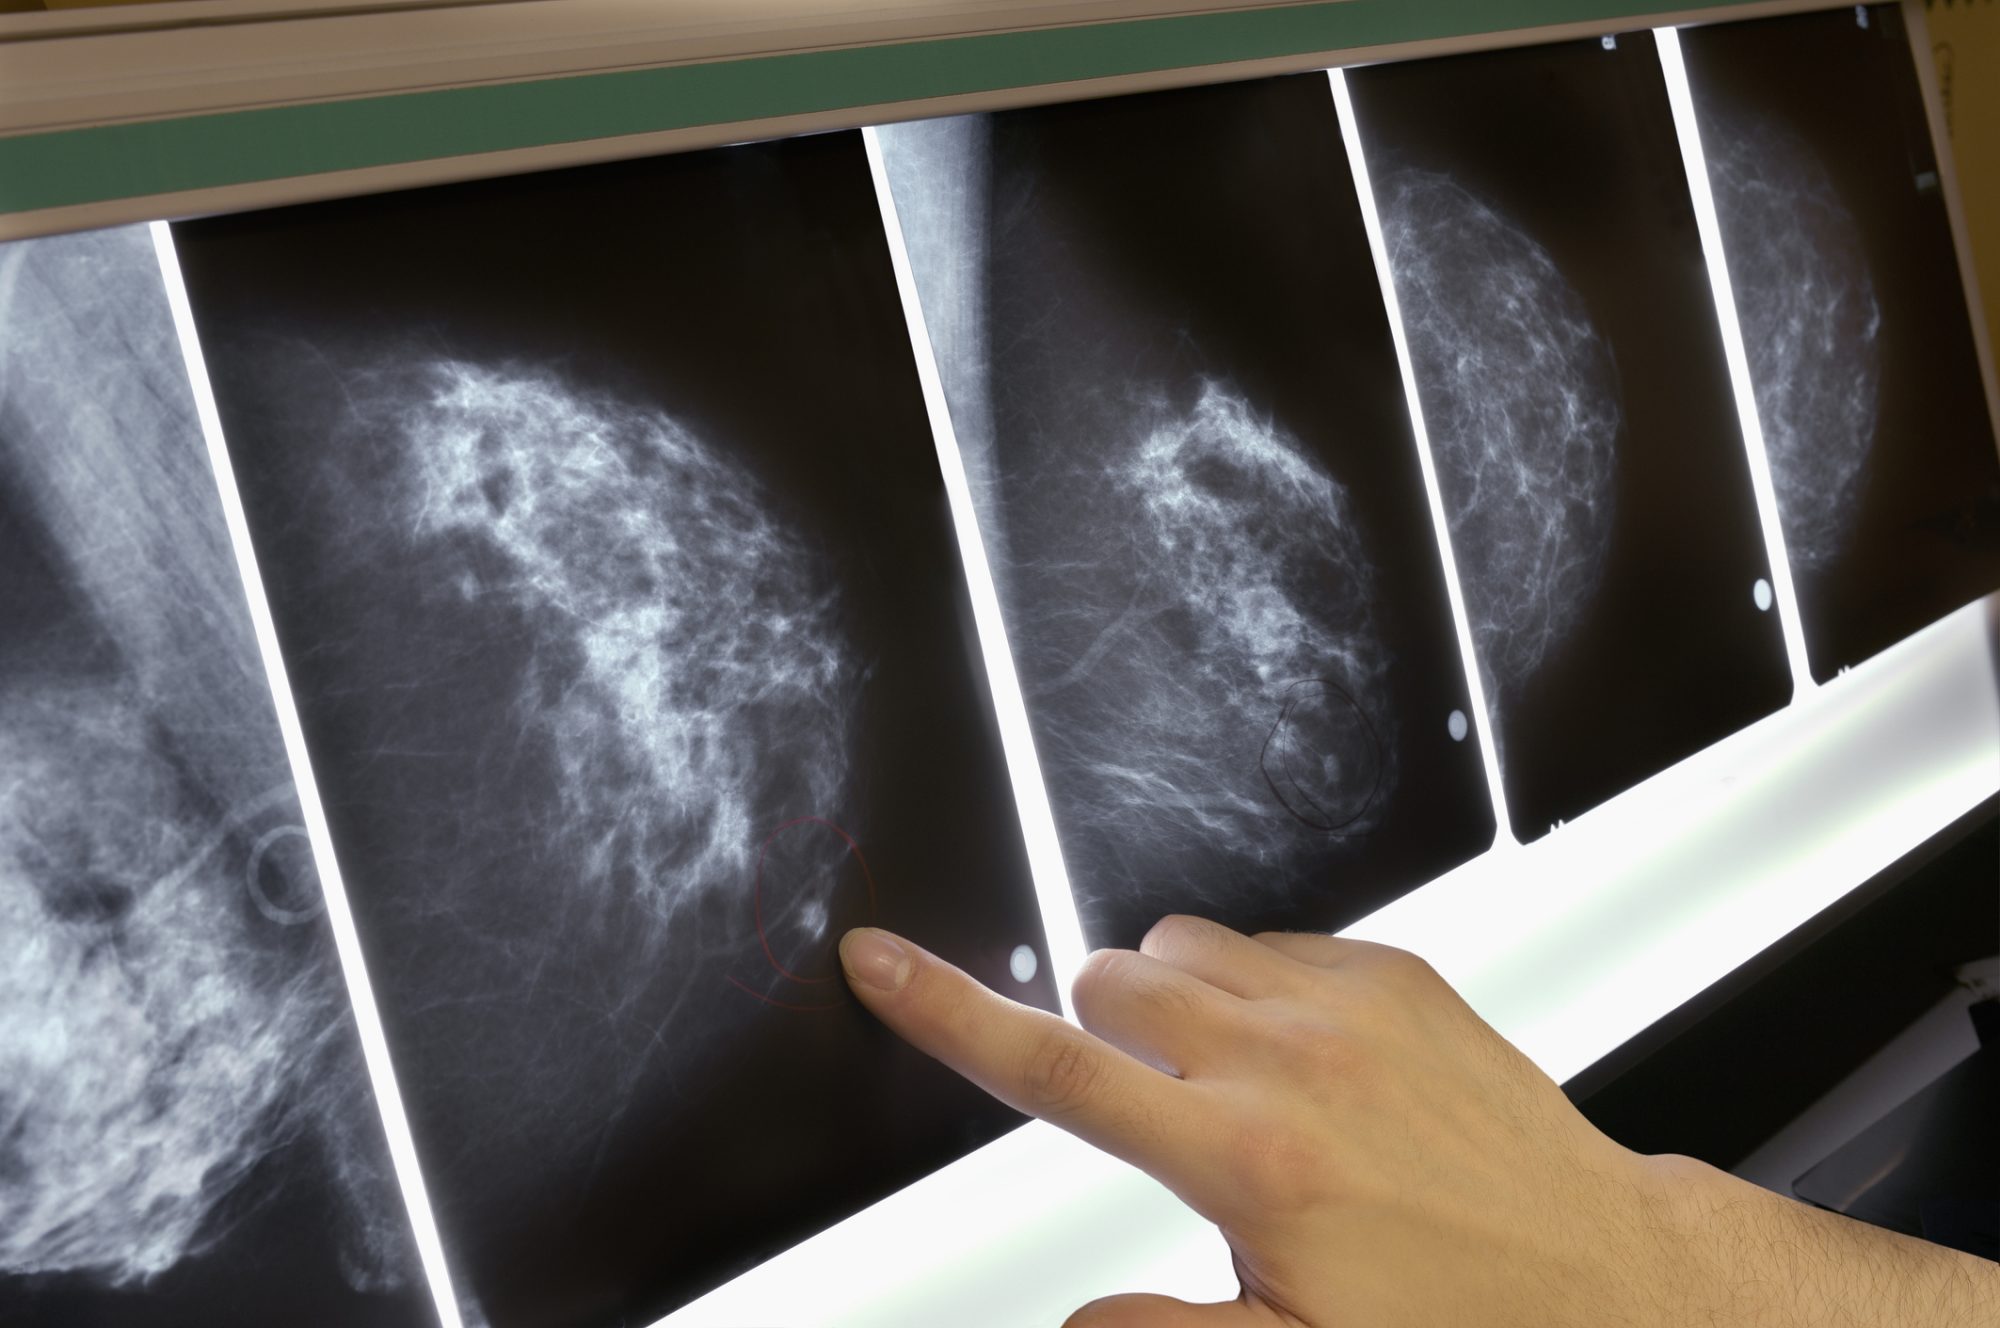 breast cancer myths